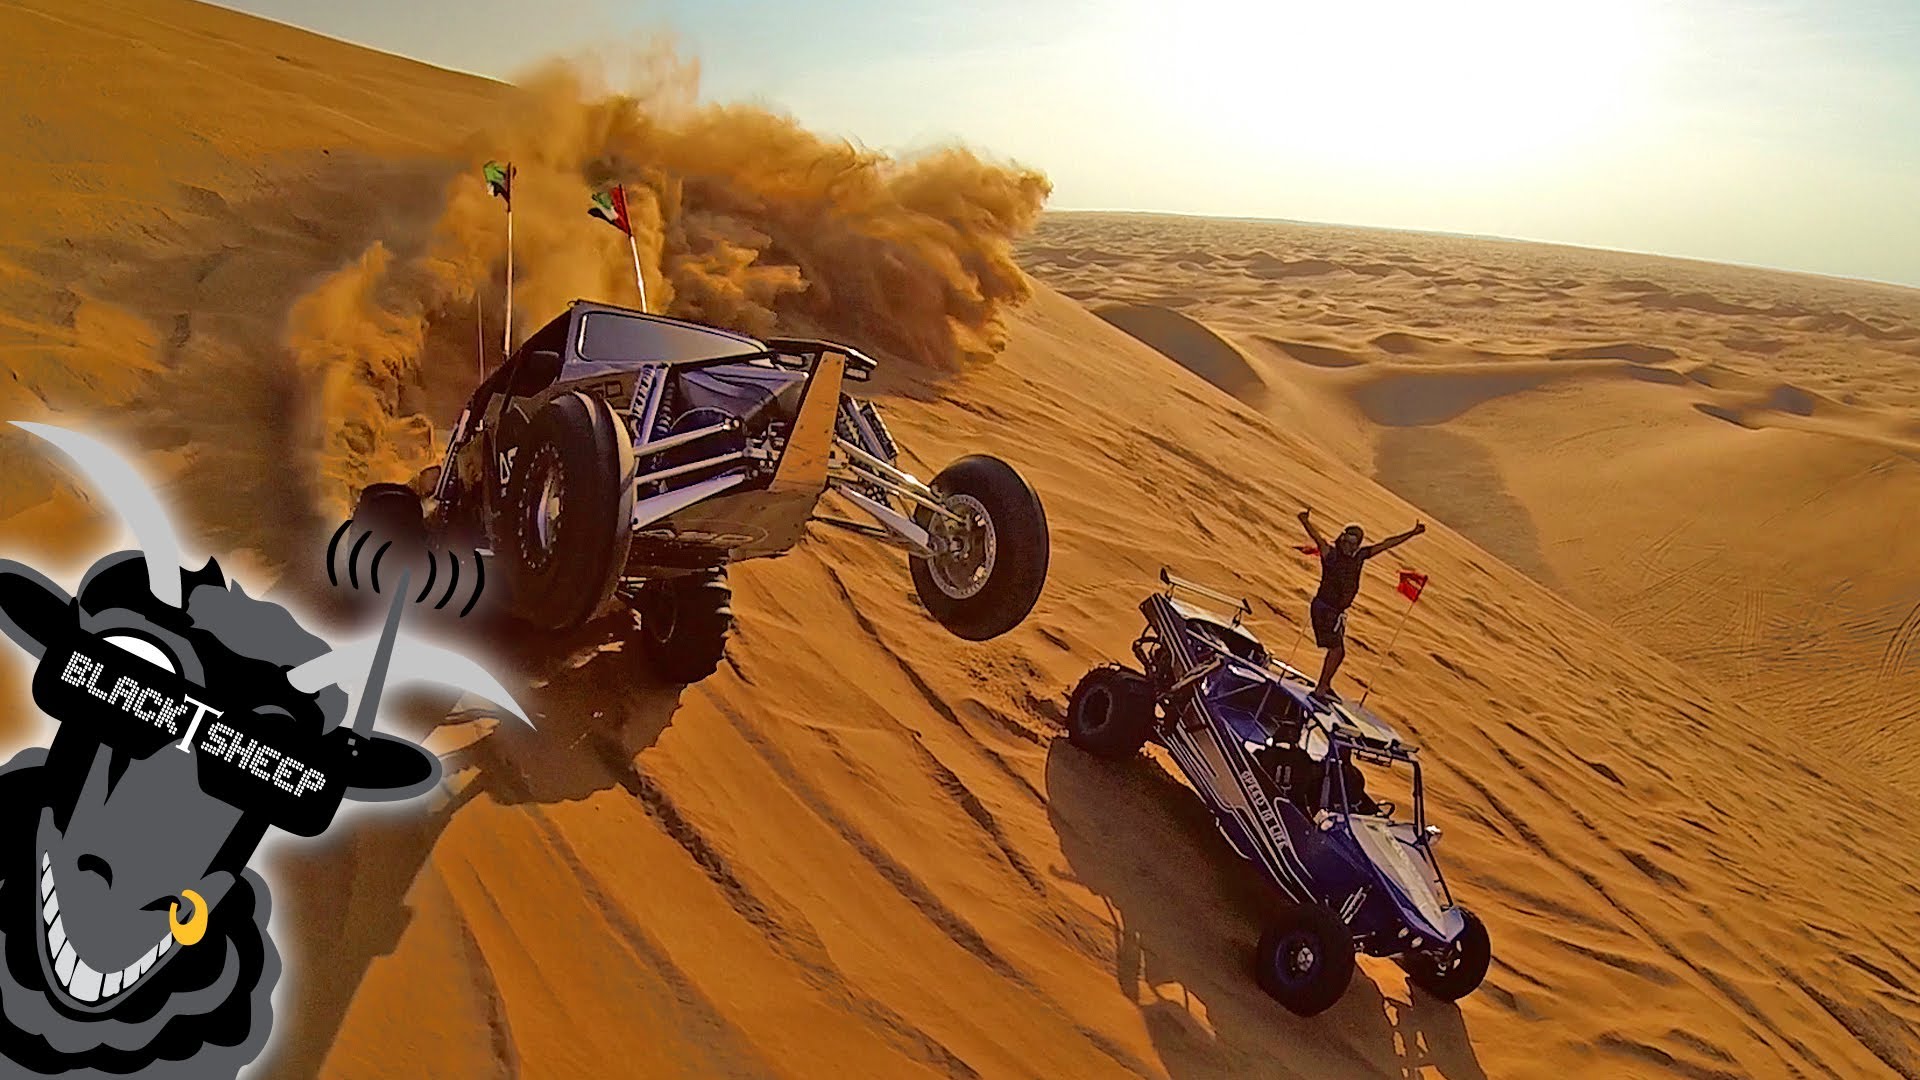 dune racing